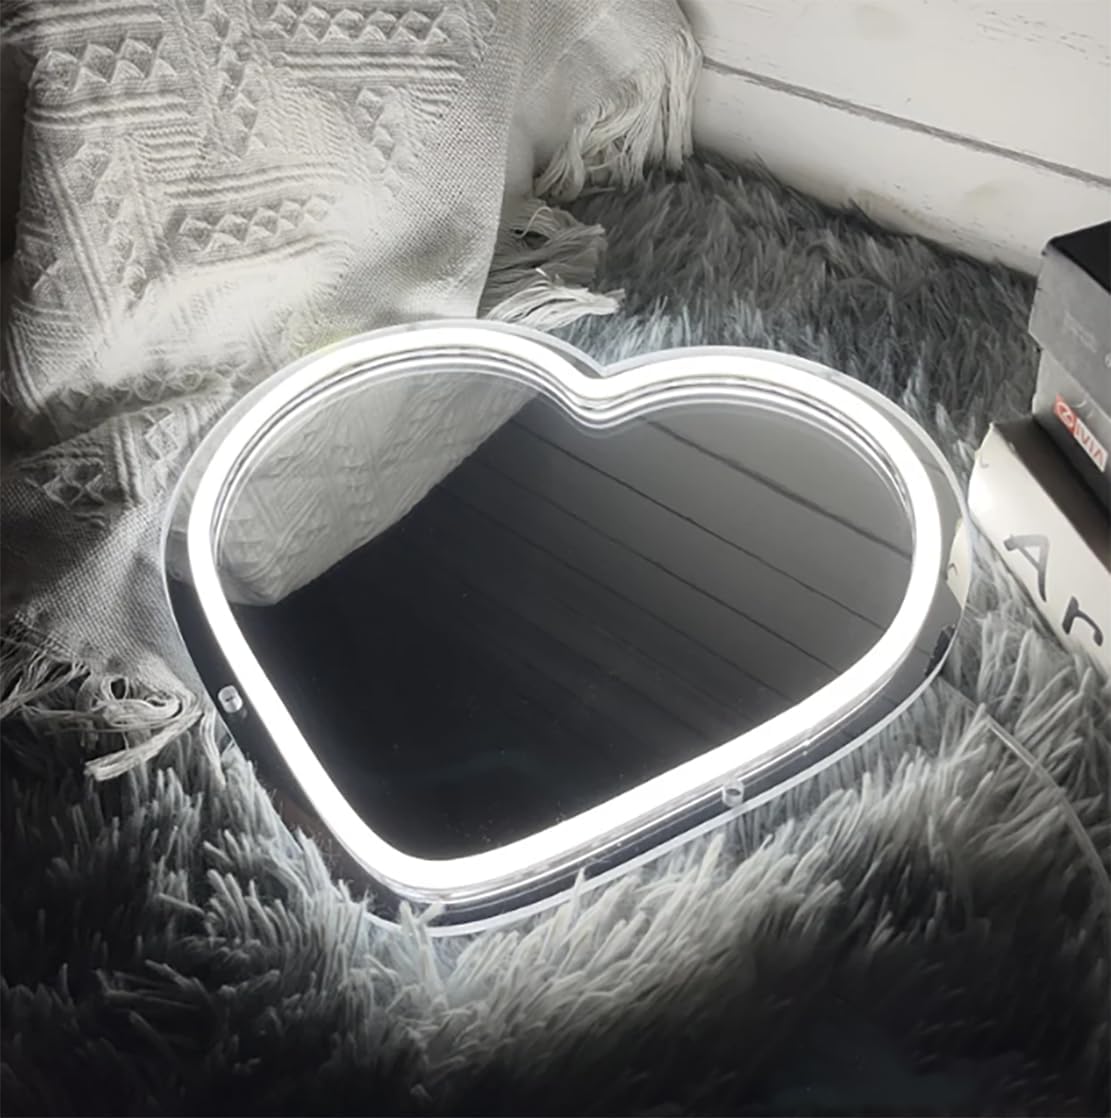 NEONIP-100% Handmade Heart Mirror Neon Light Cute for Bedroom Decor